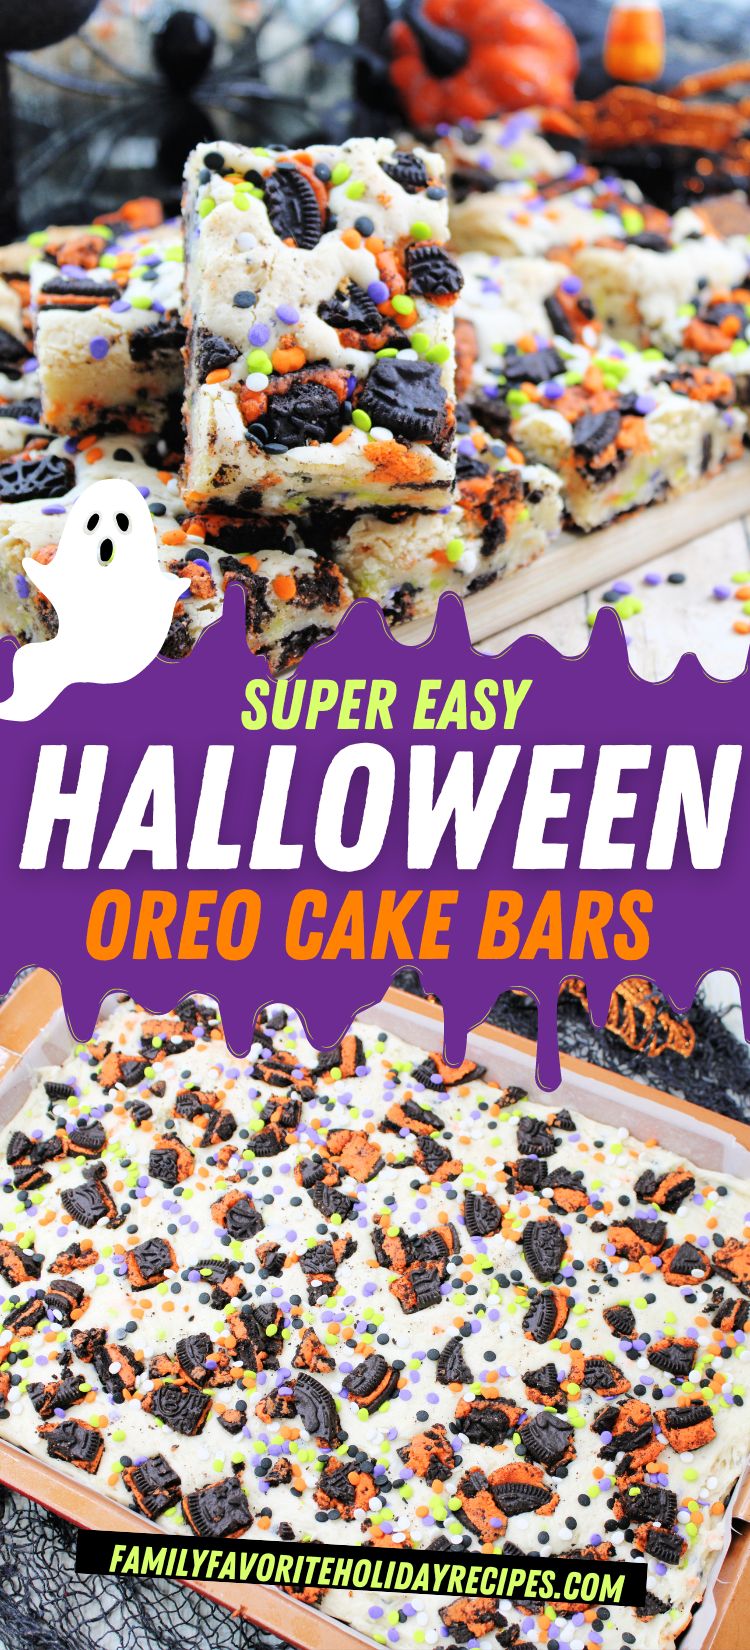 two photos featuring Halloween Oreo cake bars